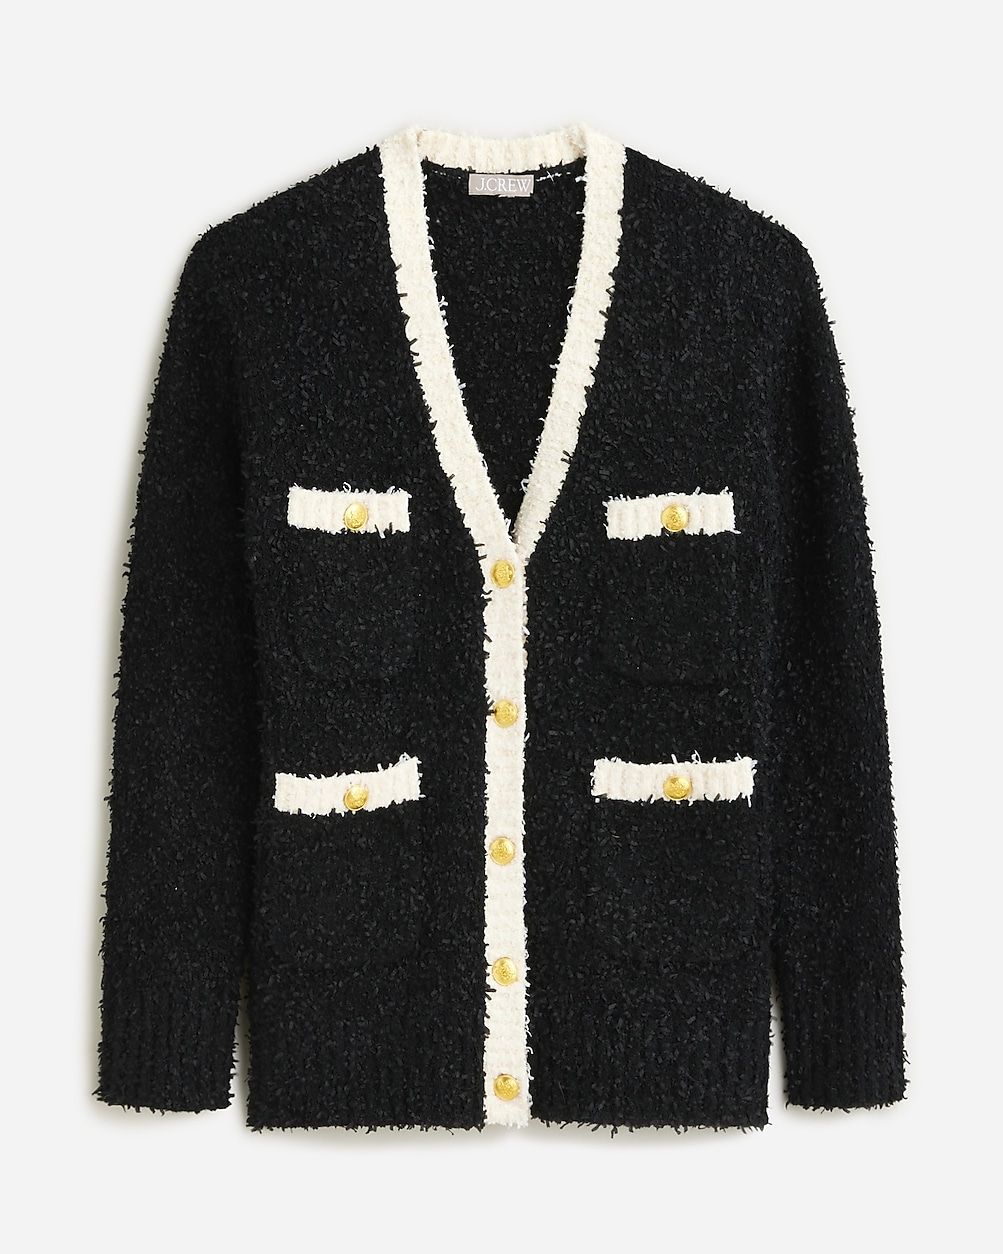 Longer sweater lady jacket in textured contrast yarn | J.Crew US